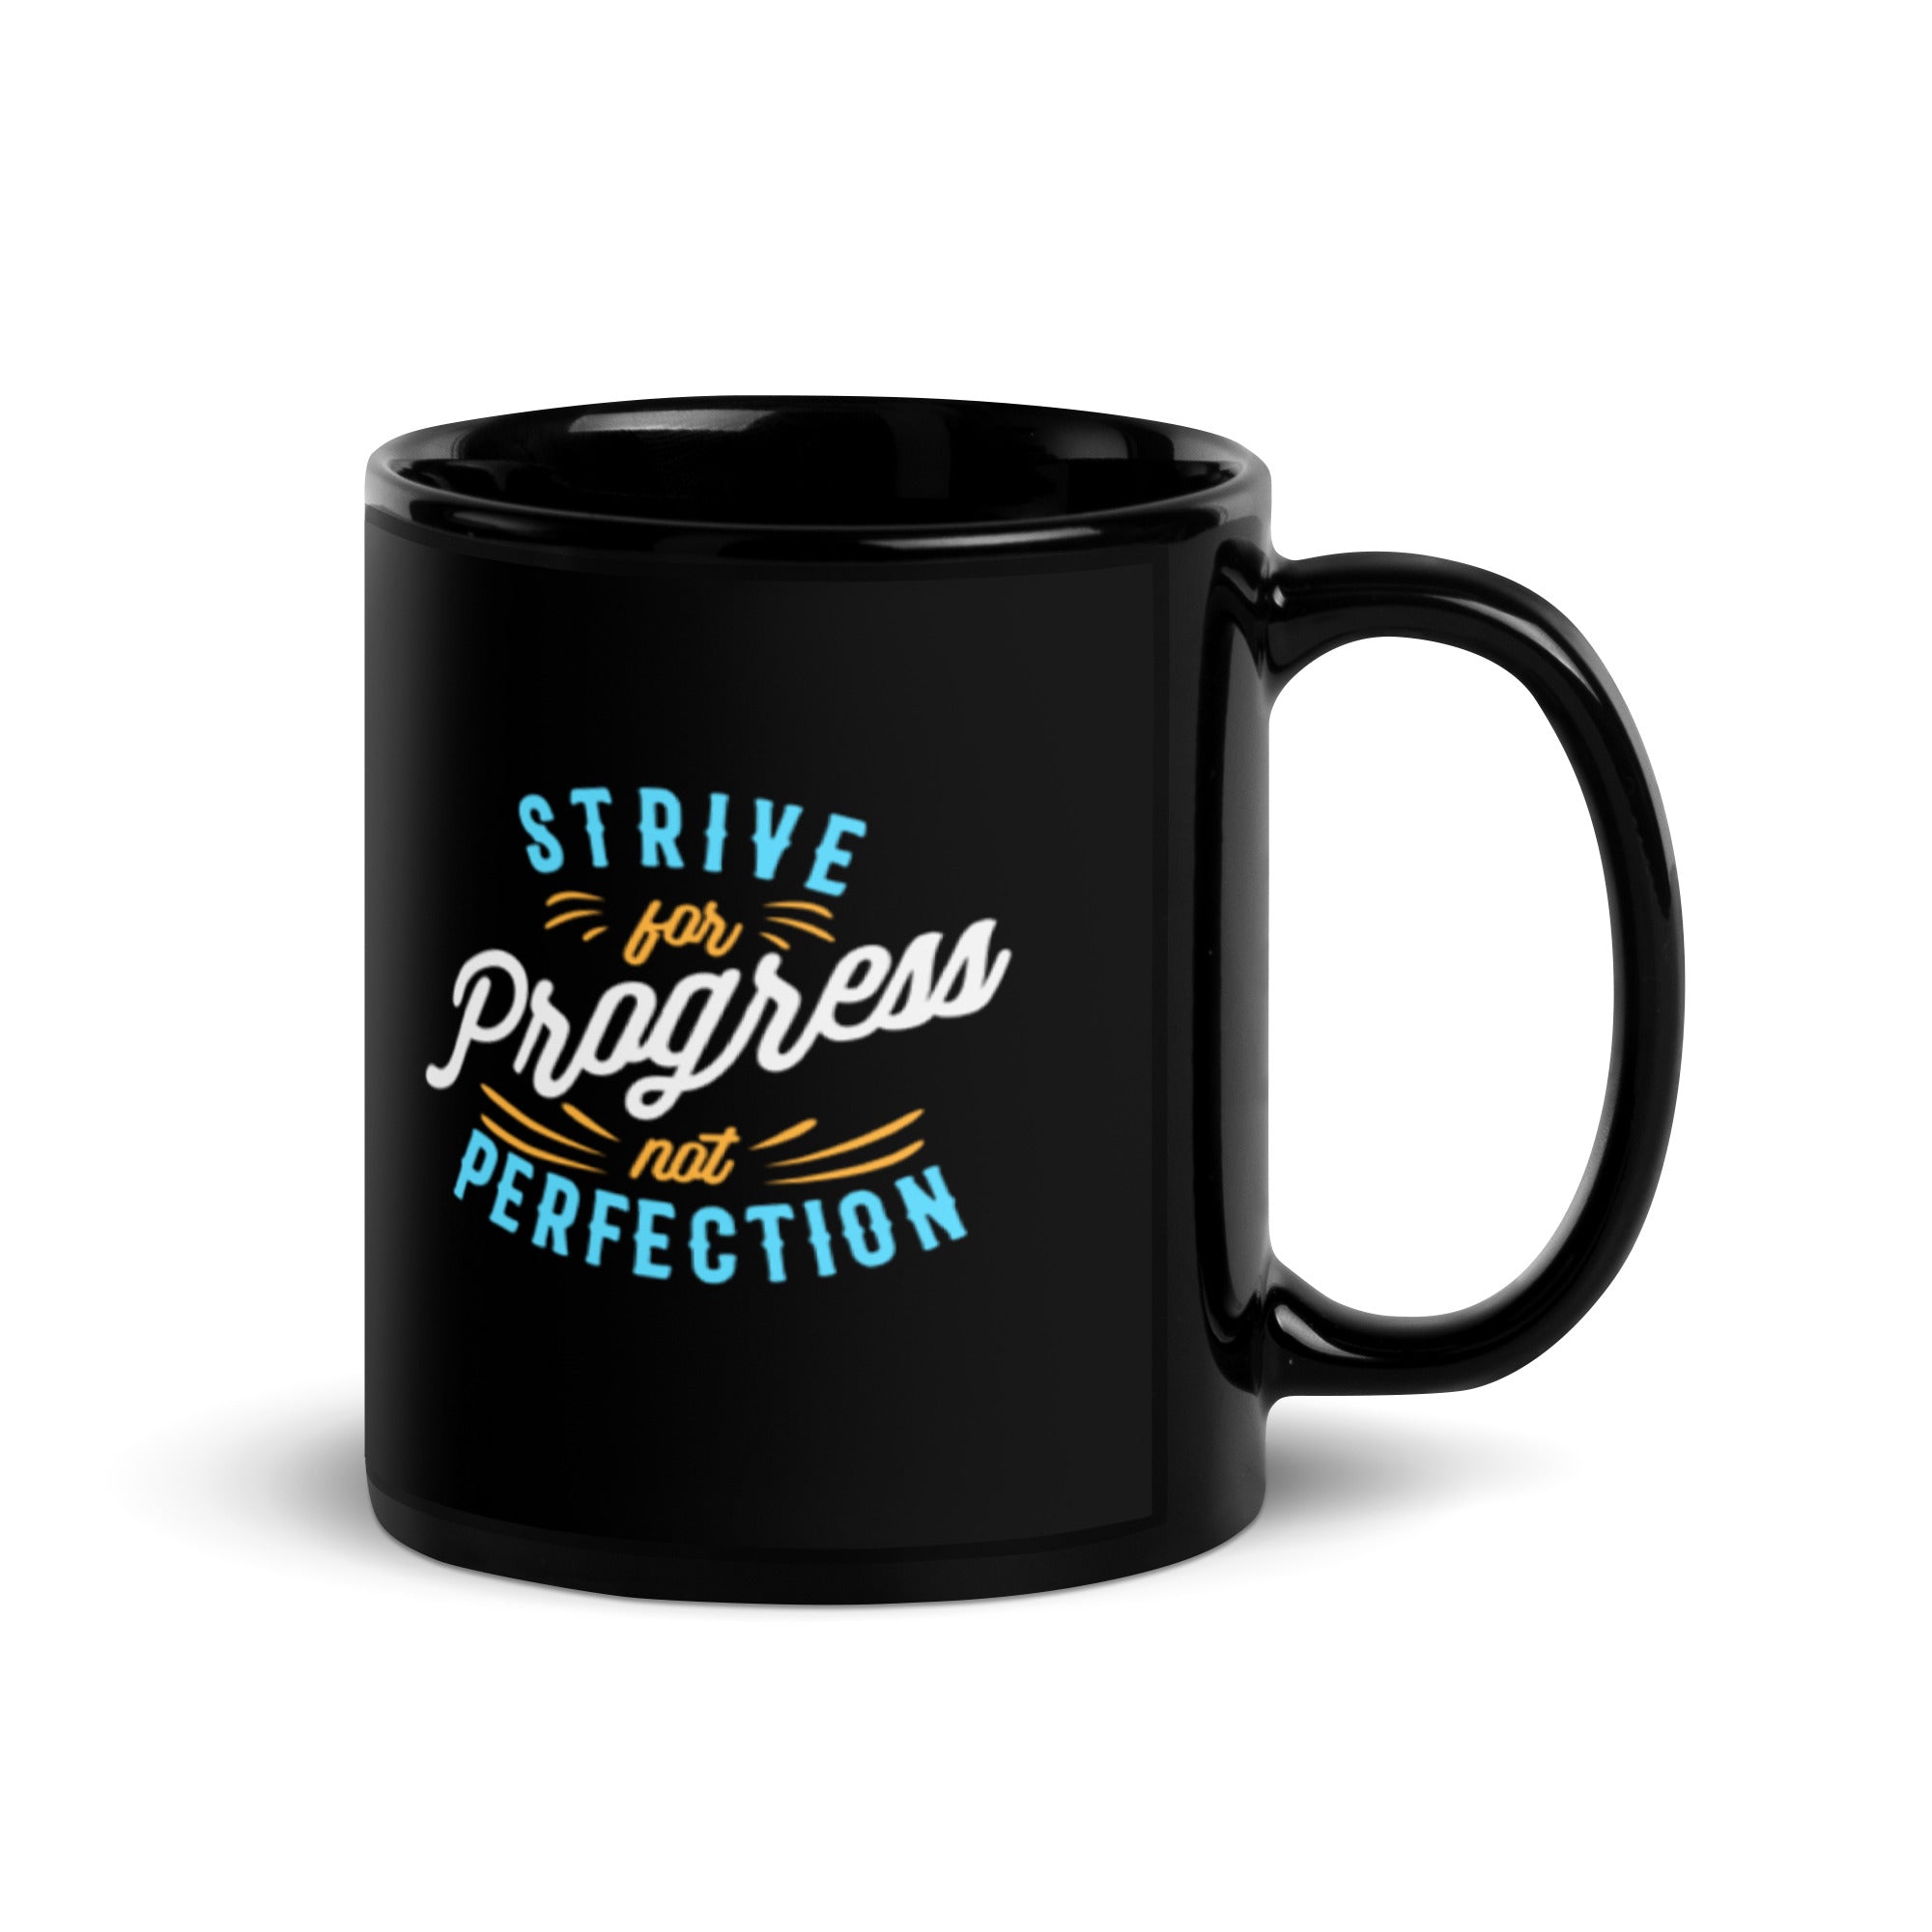 Strive For Progress Not Perfection - Black Glossy Mug